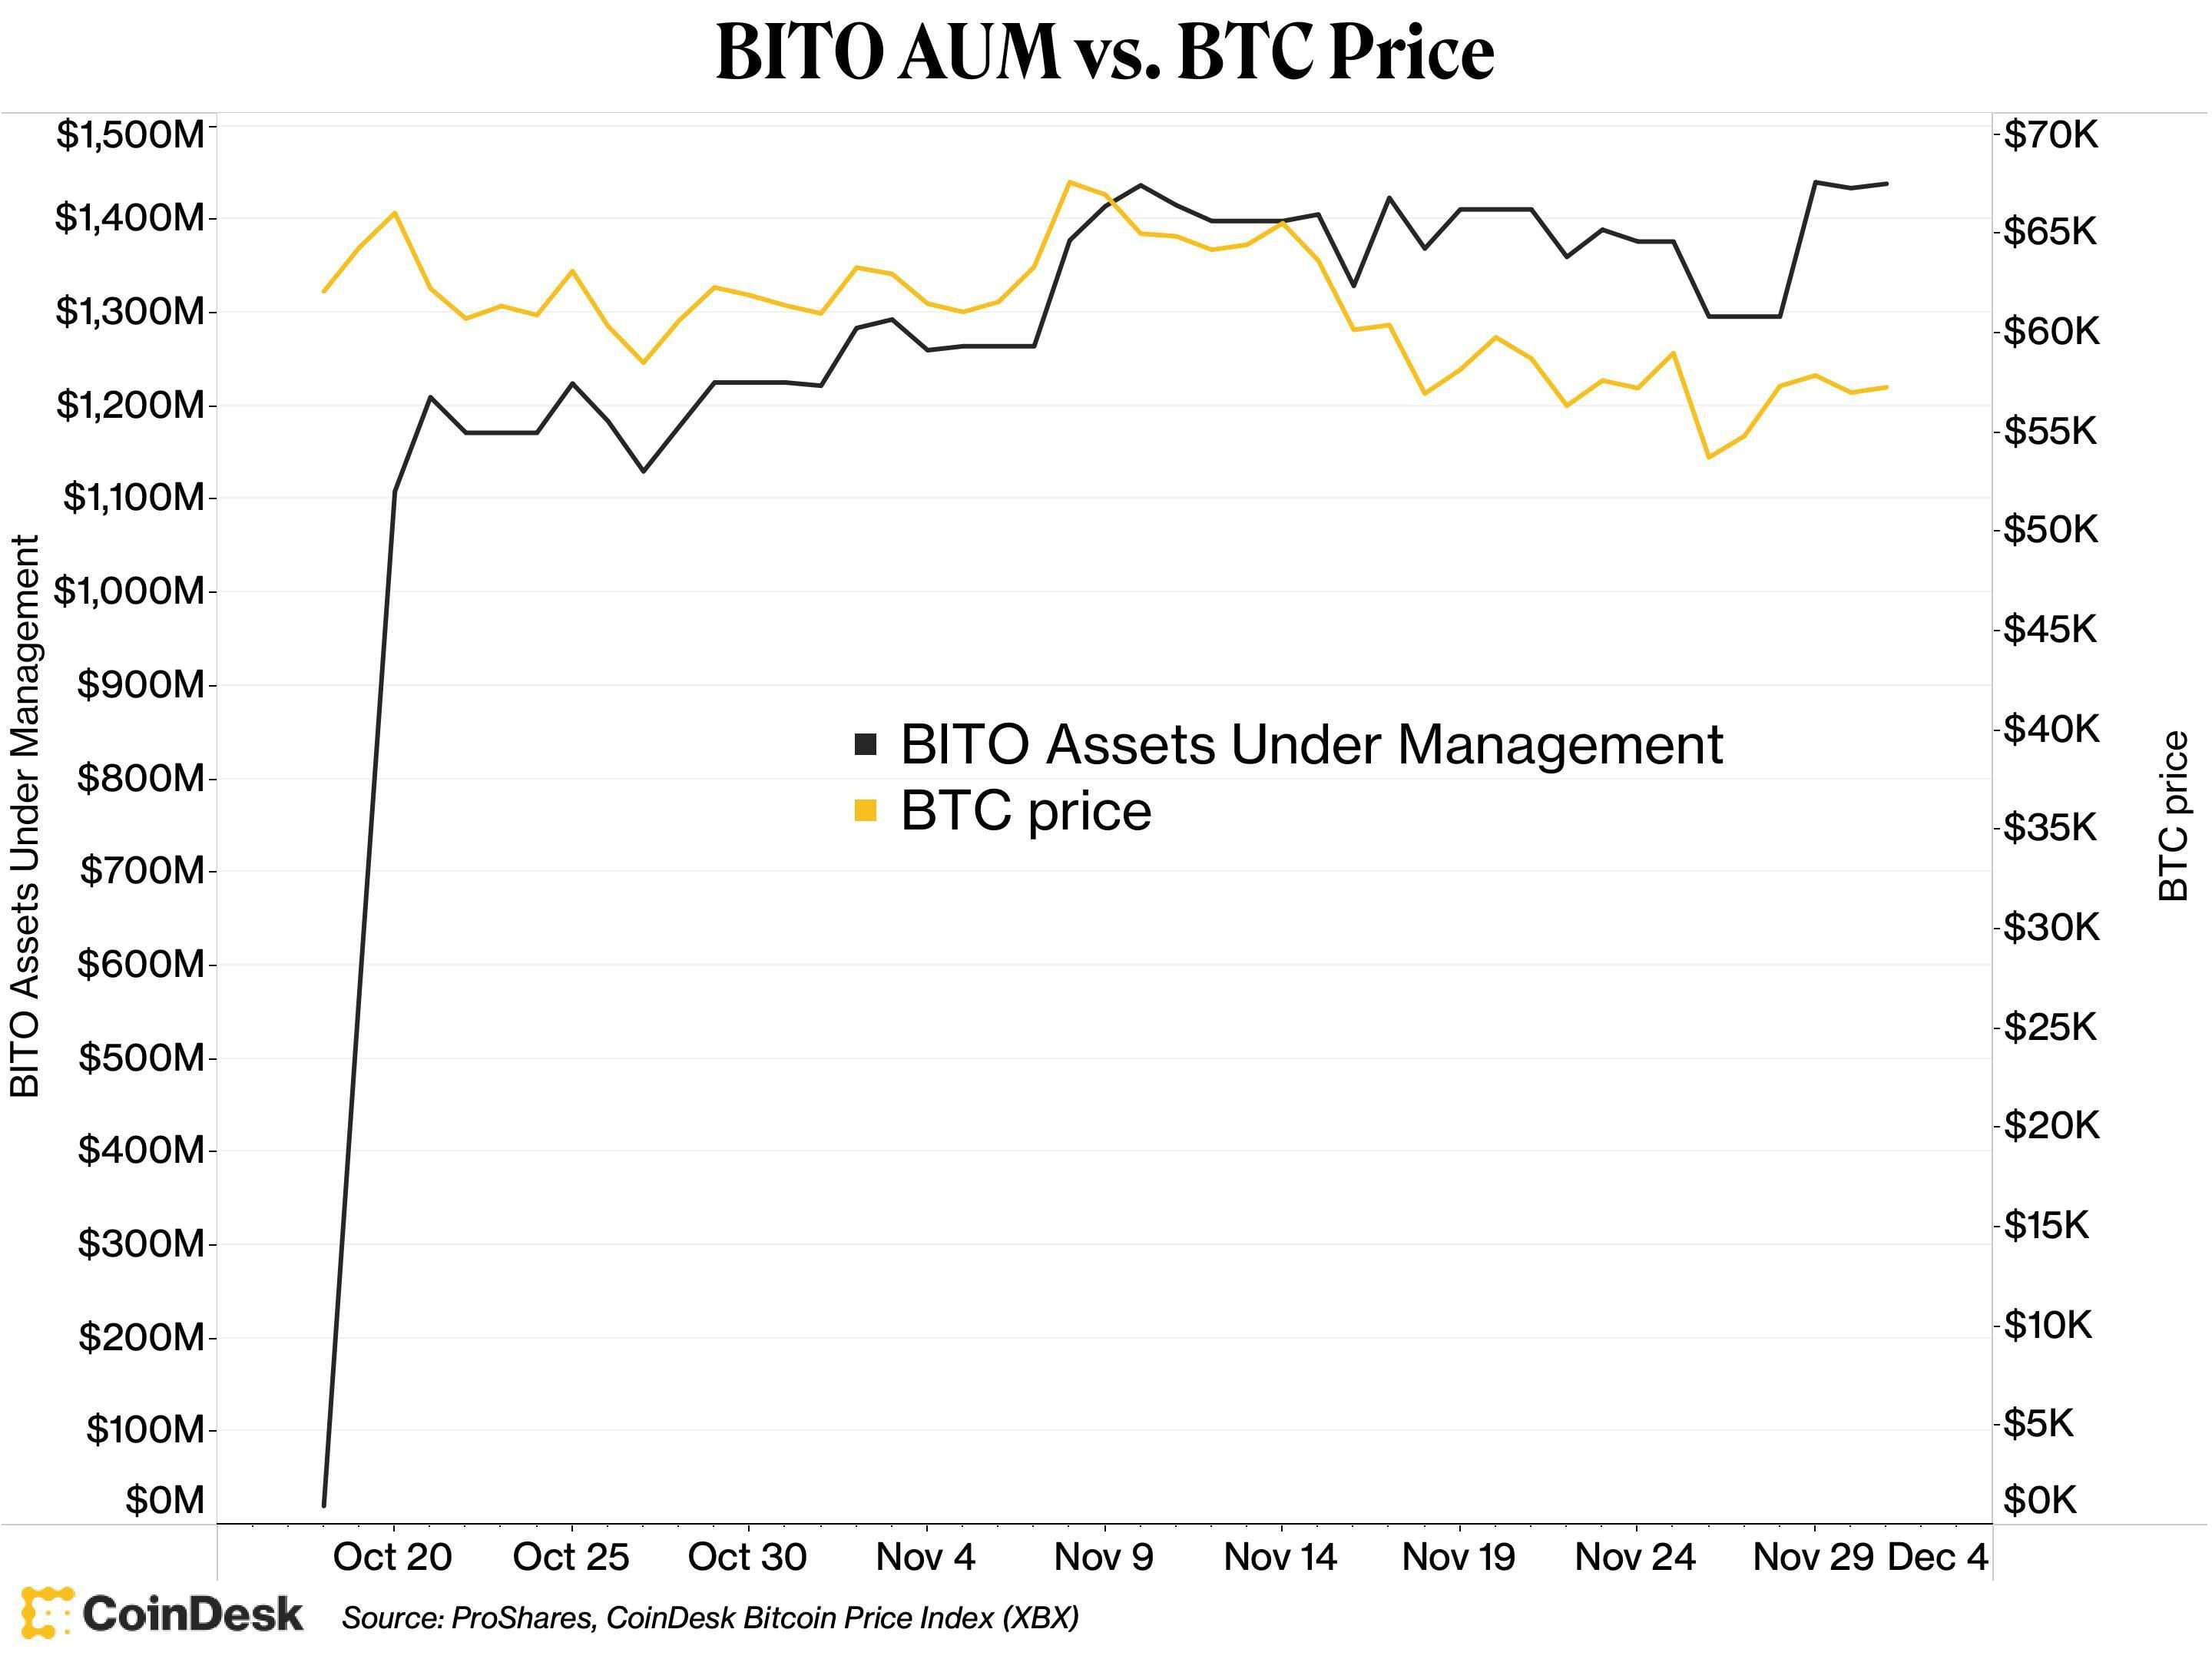 ProShares Bitcoin Strategy ETF (BITO) assets under management versus bitcoin prices.